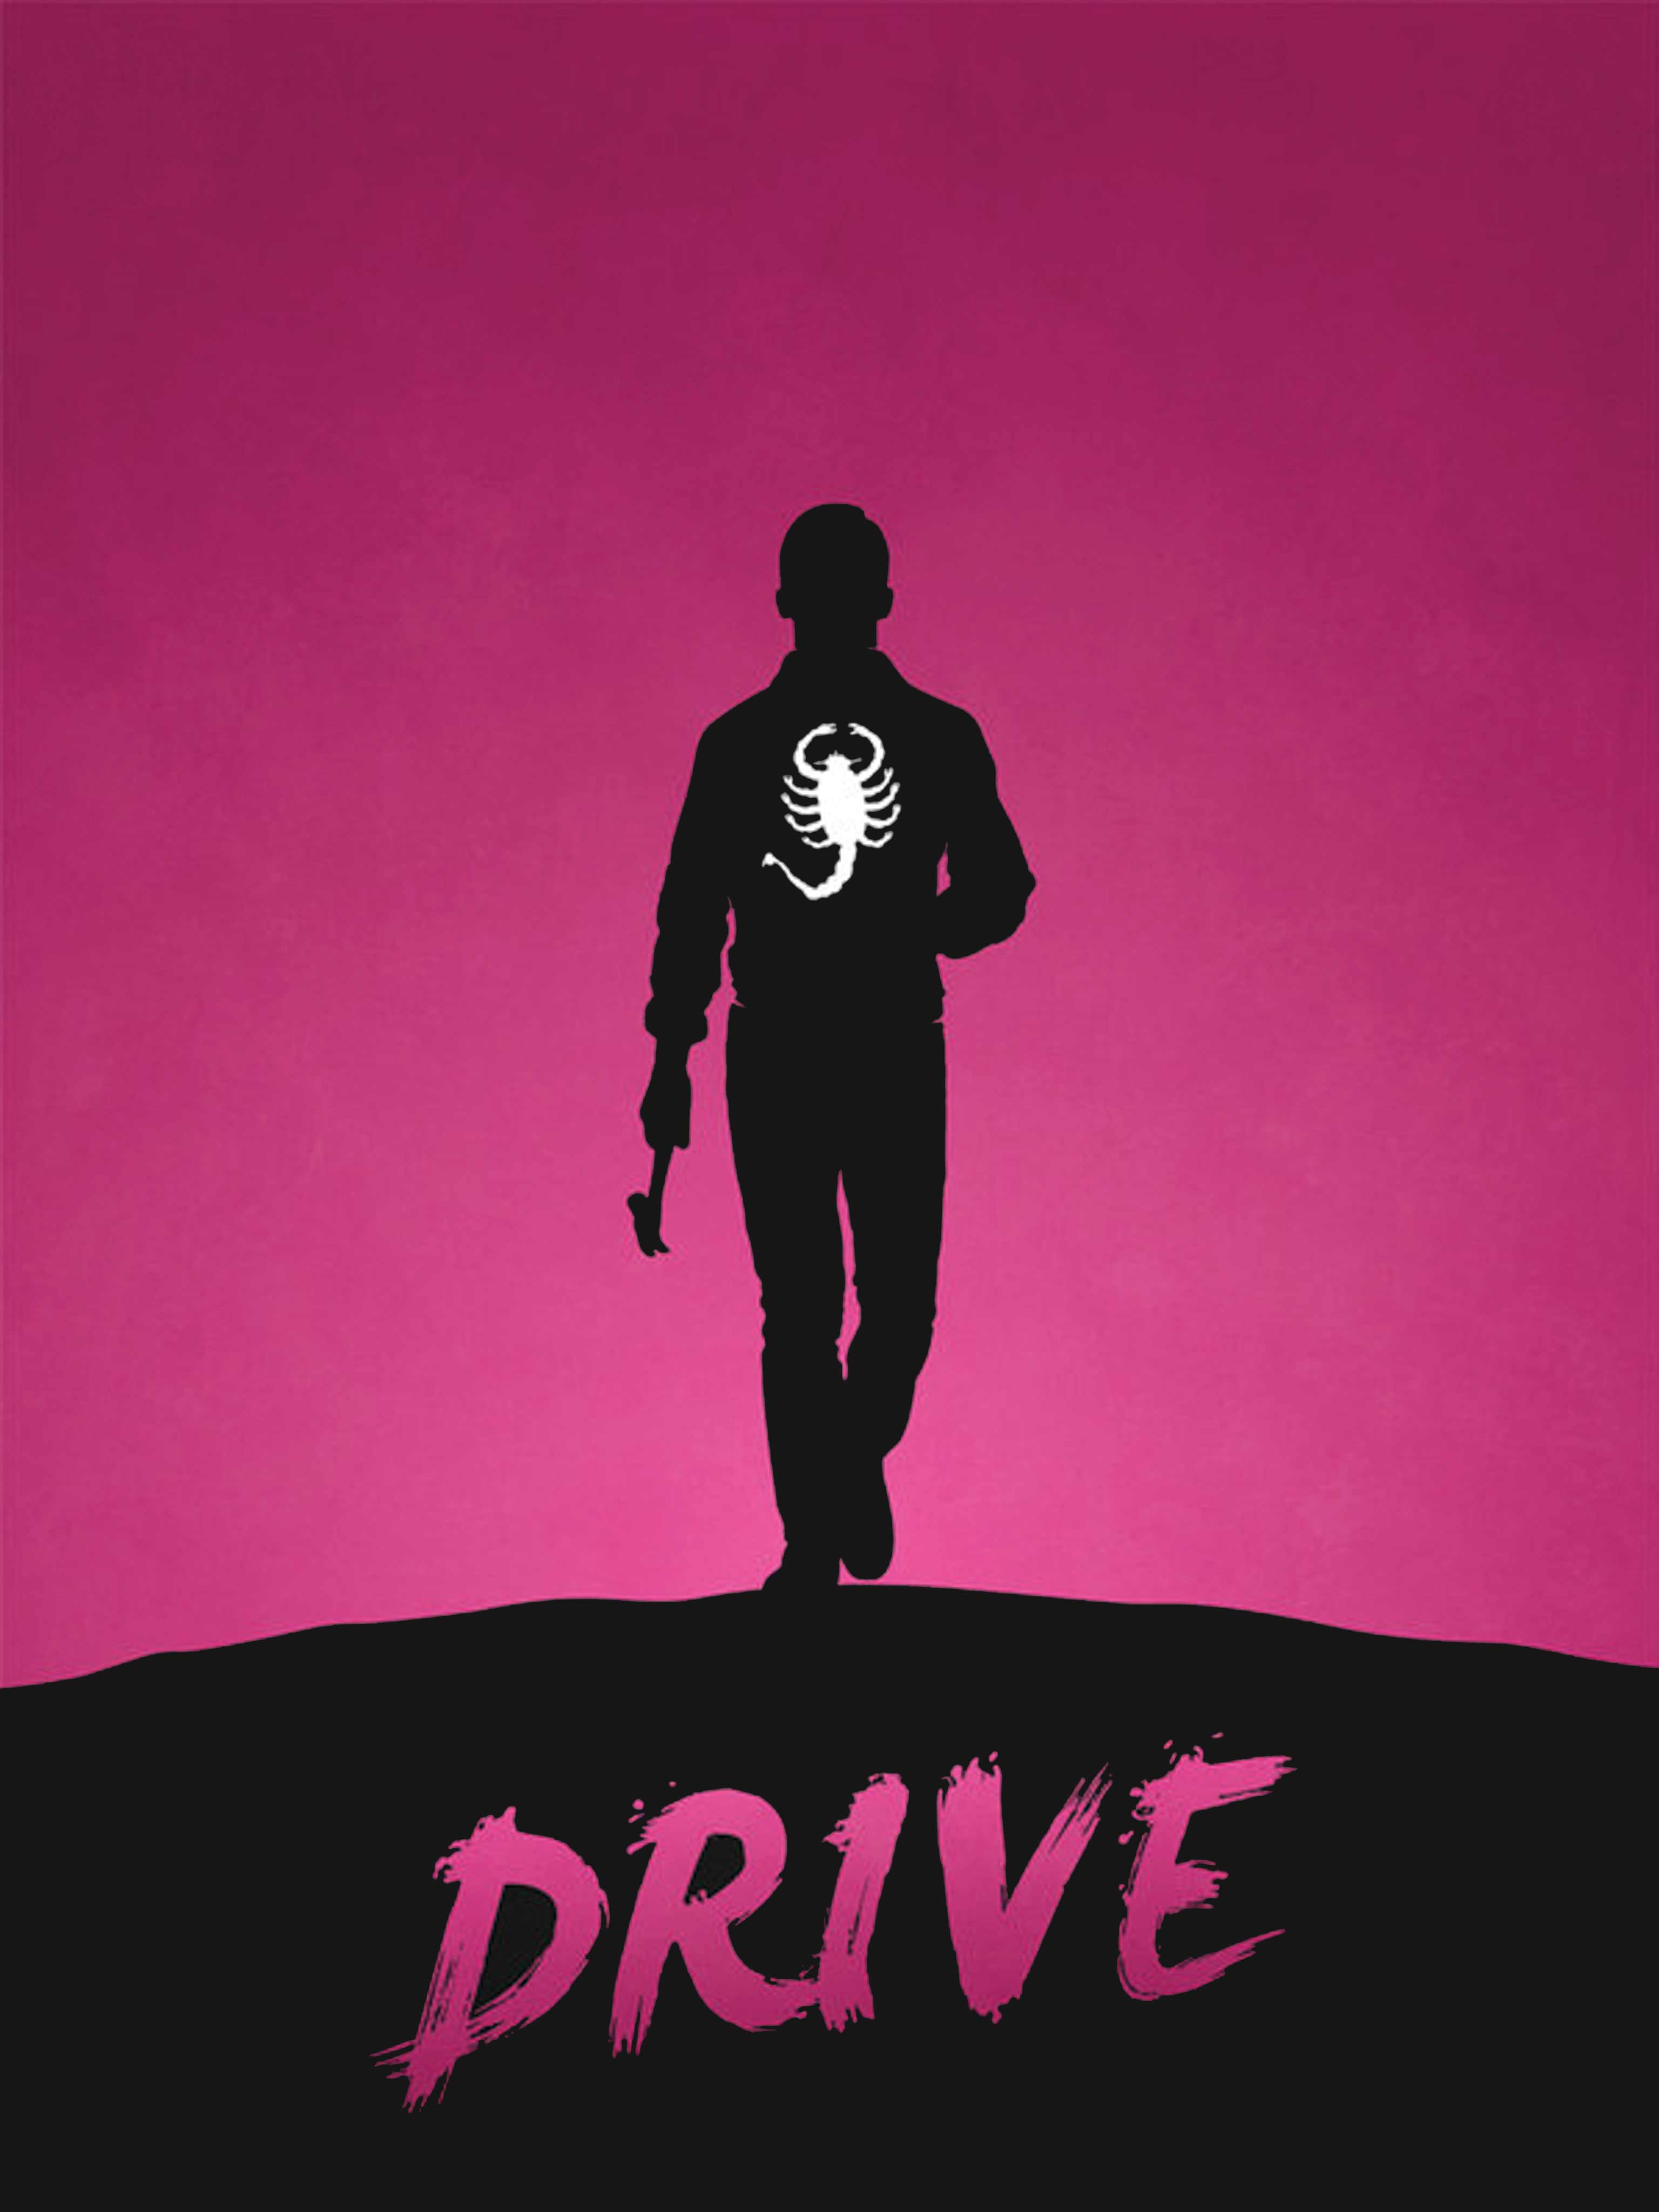 Wallpaper drive drive drive 2011 movie Ryan Gosling images for desktop  section фильмы  download